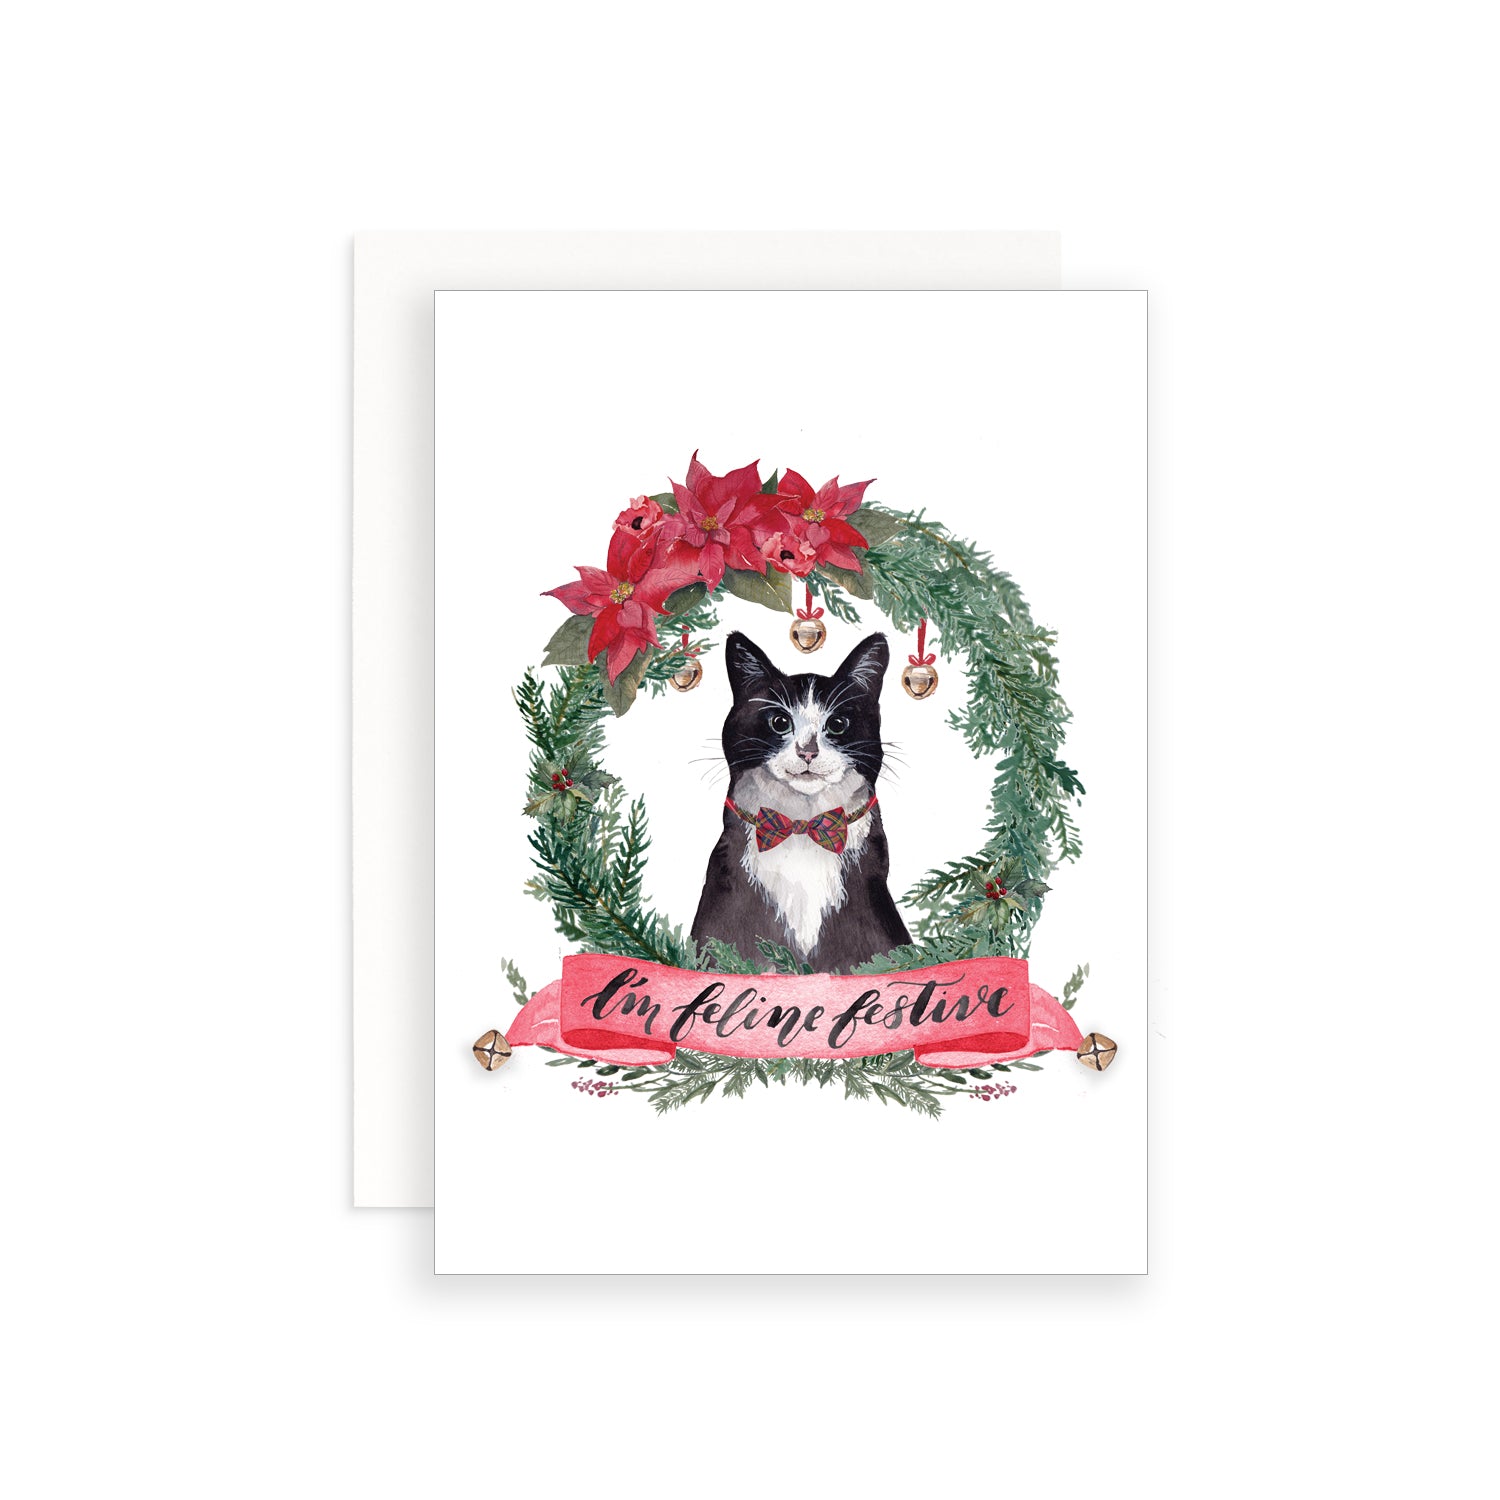 I'm Feline Festive Greeting Card